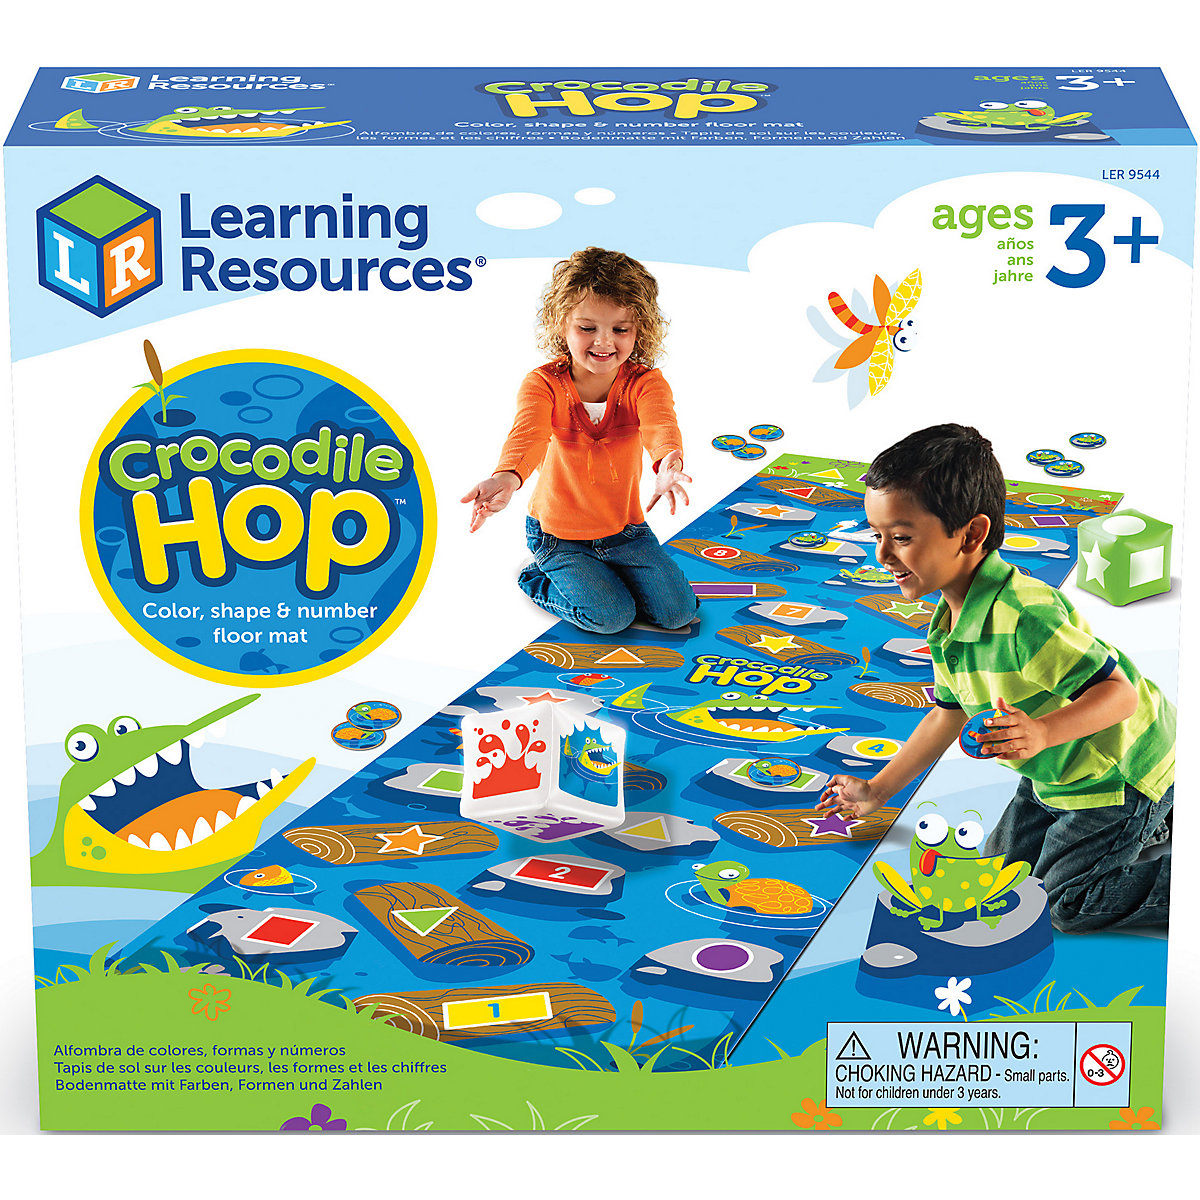 Learning Resources® Crocodile Hop Hüpf- und Lernspaß